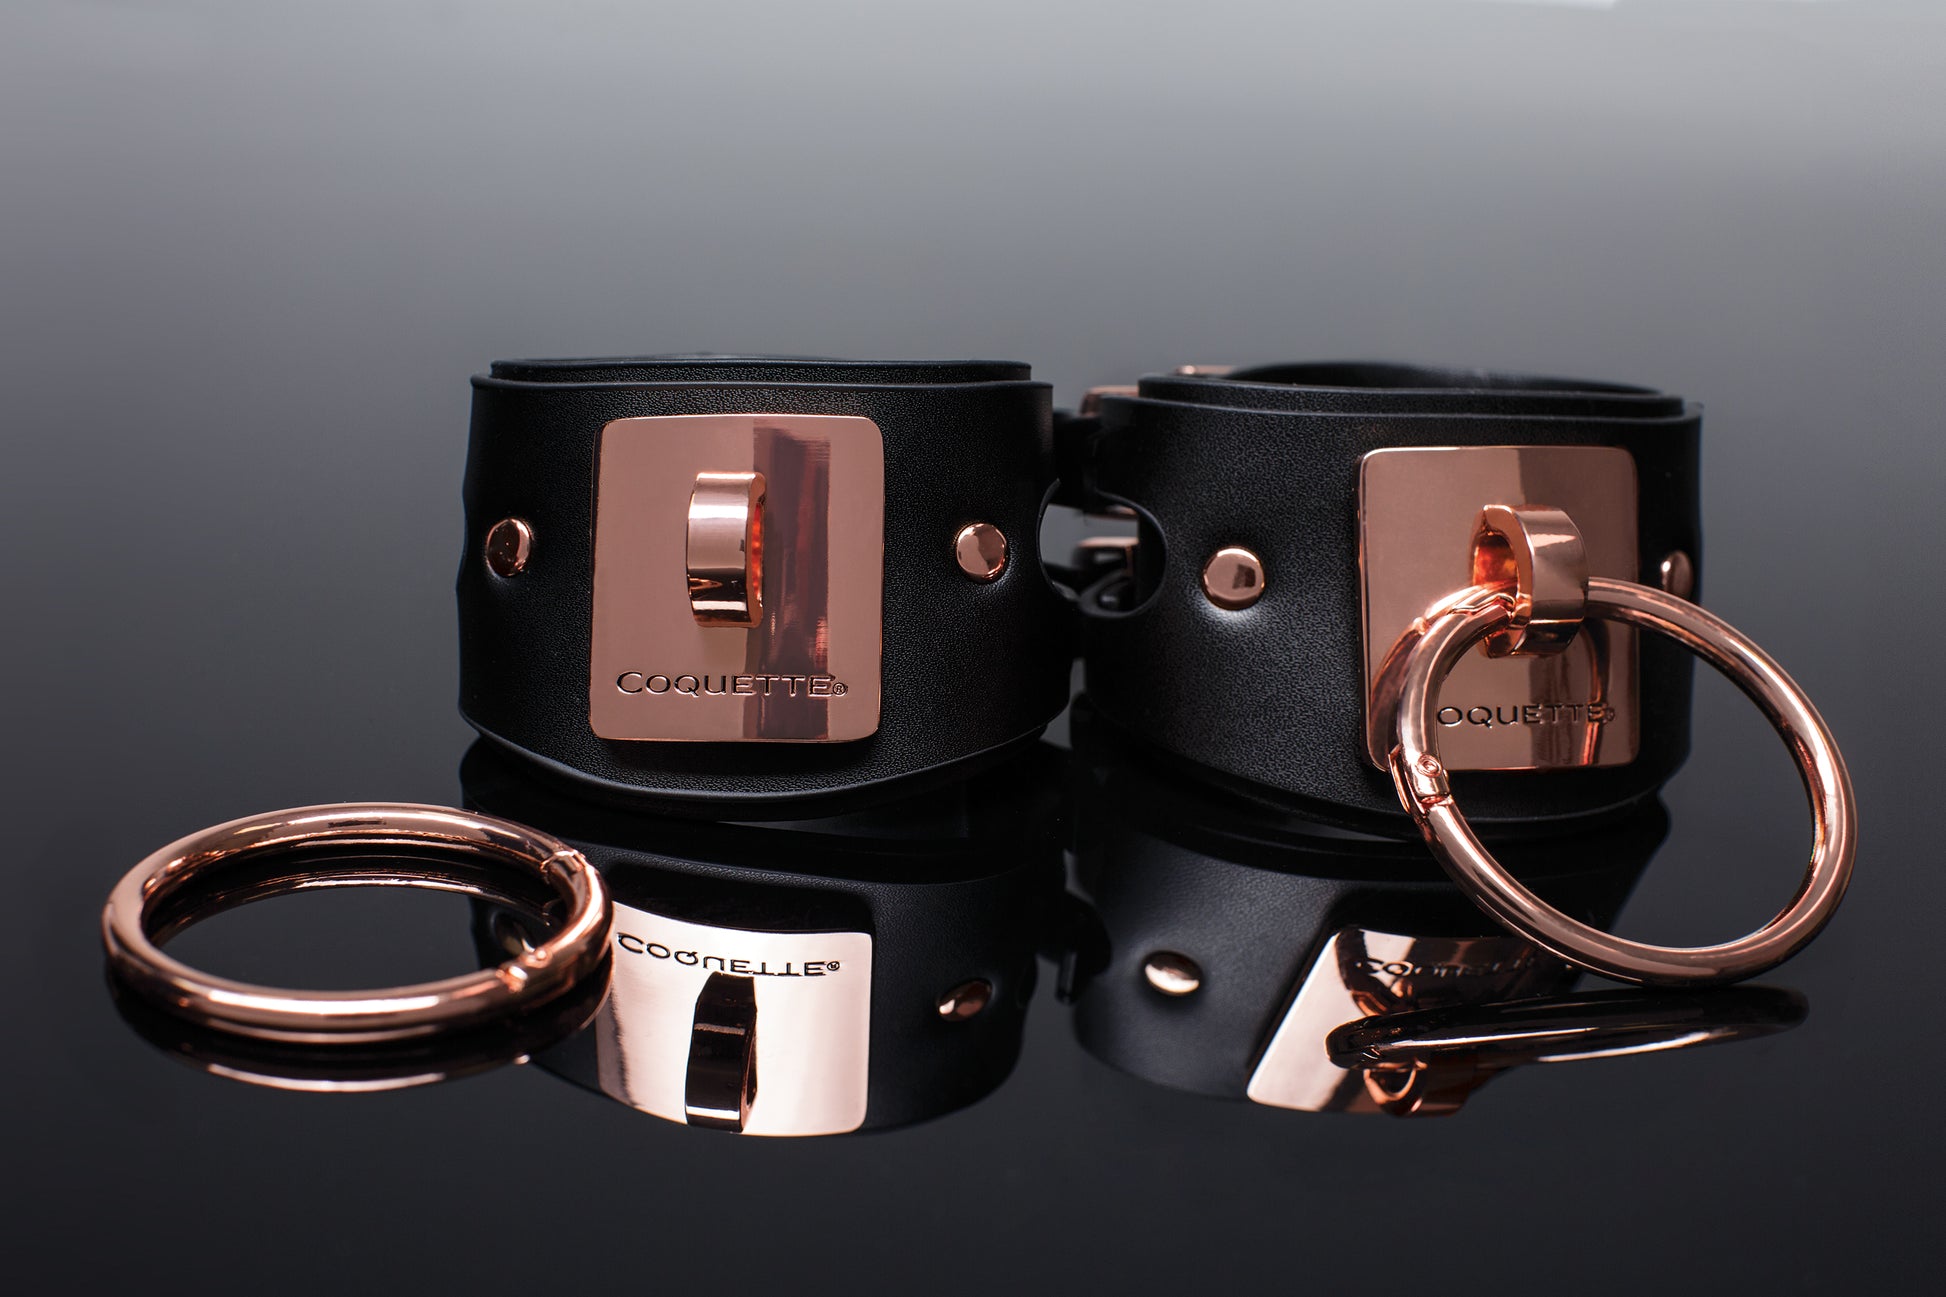 Coquette Faux Leather Handcuffs